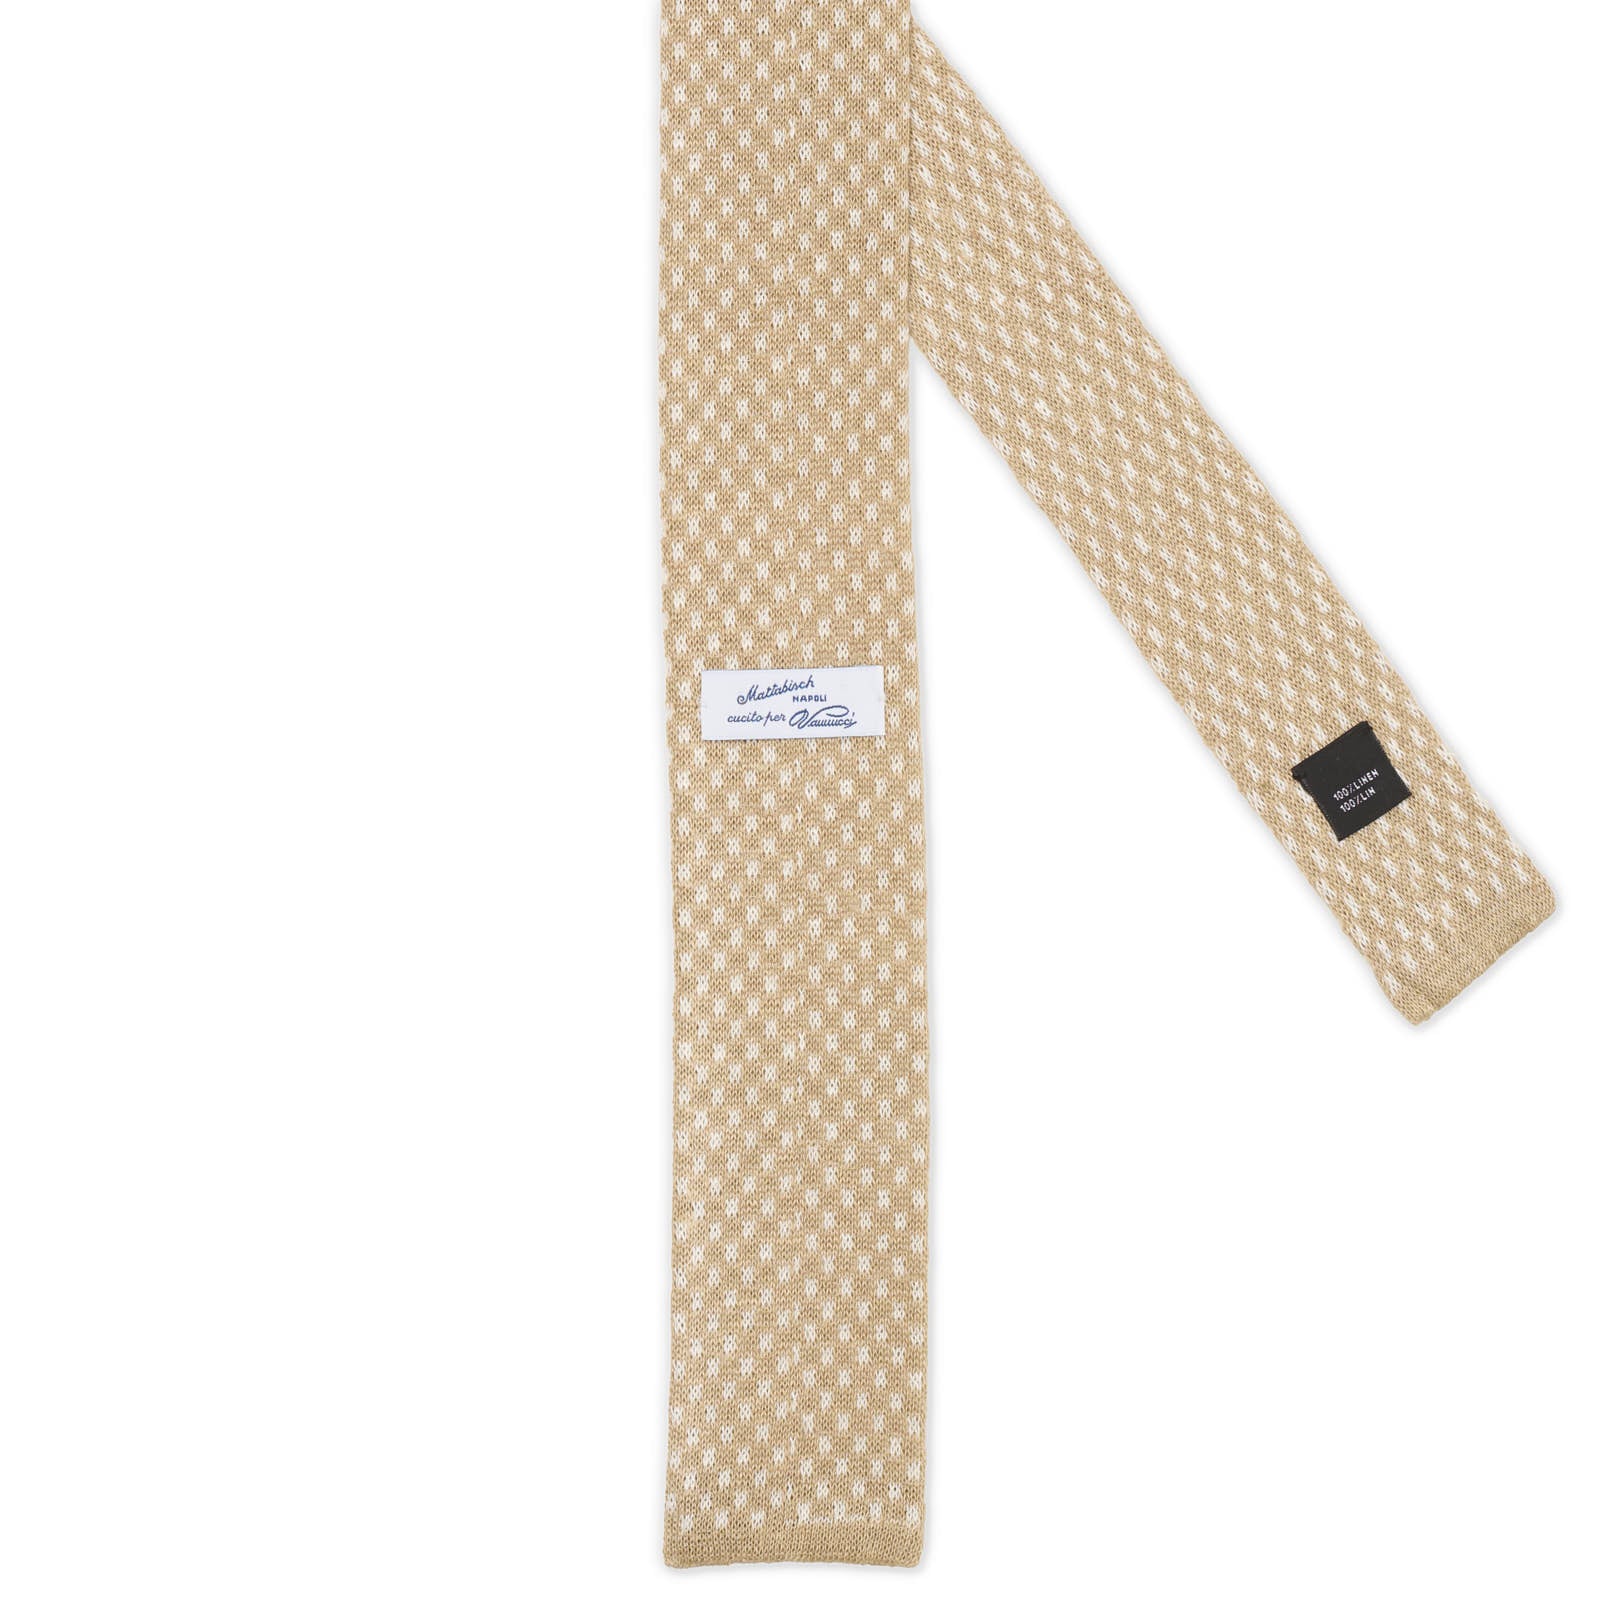 MATTABISCH FOR VANNUCCI Tan Dotted Linen Knit Tie NEW